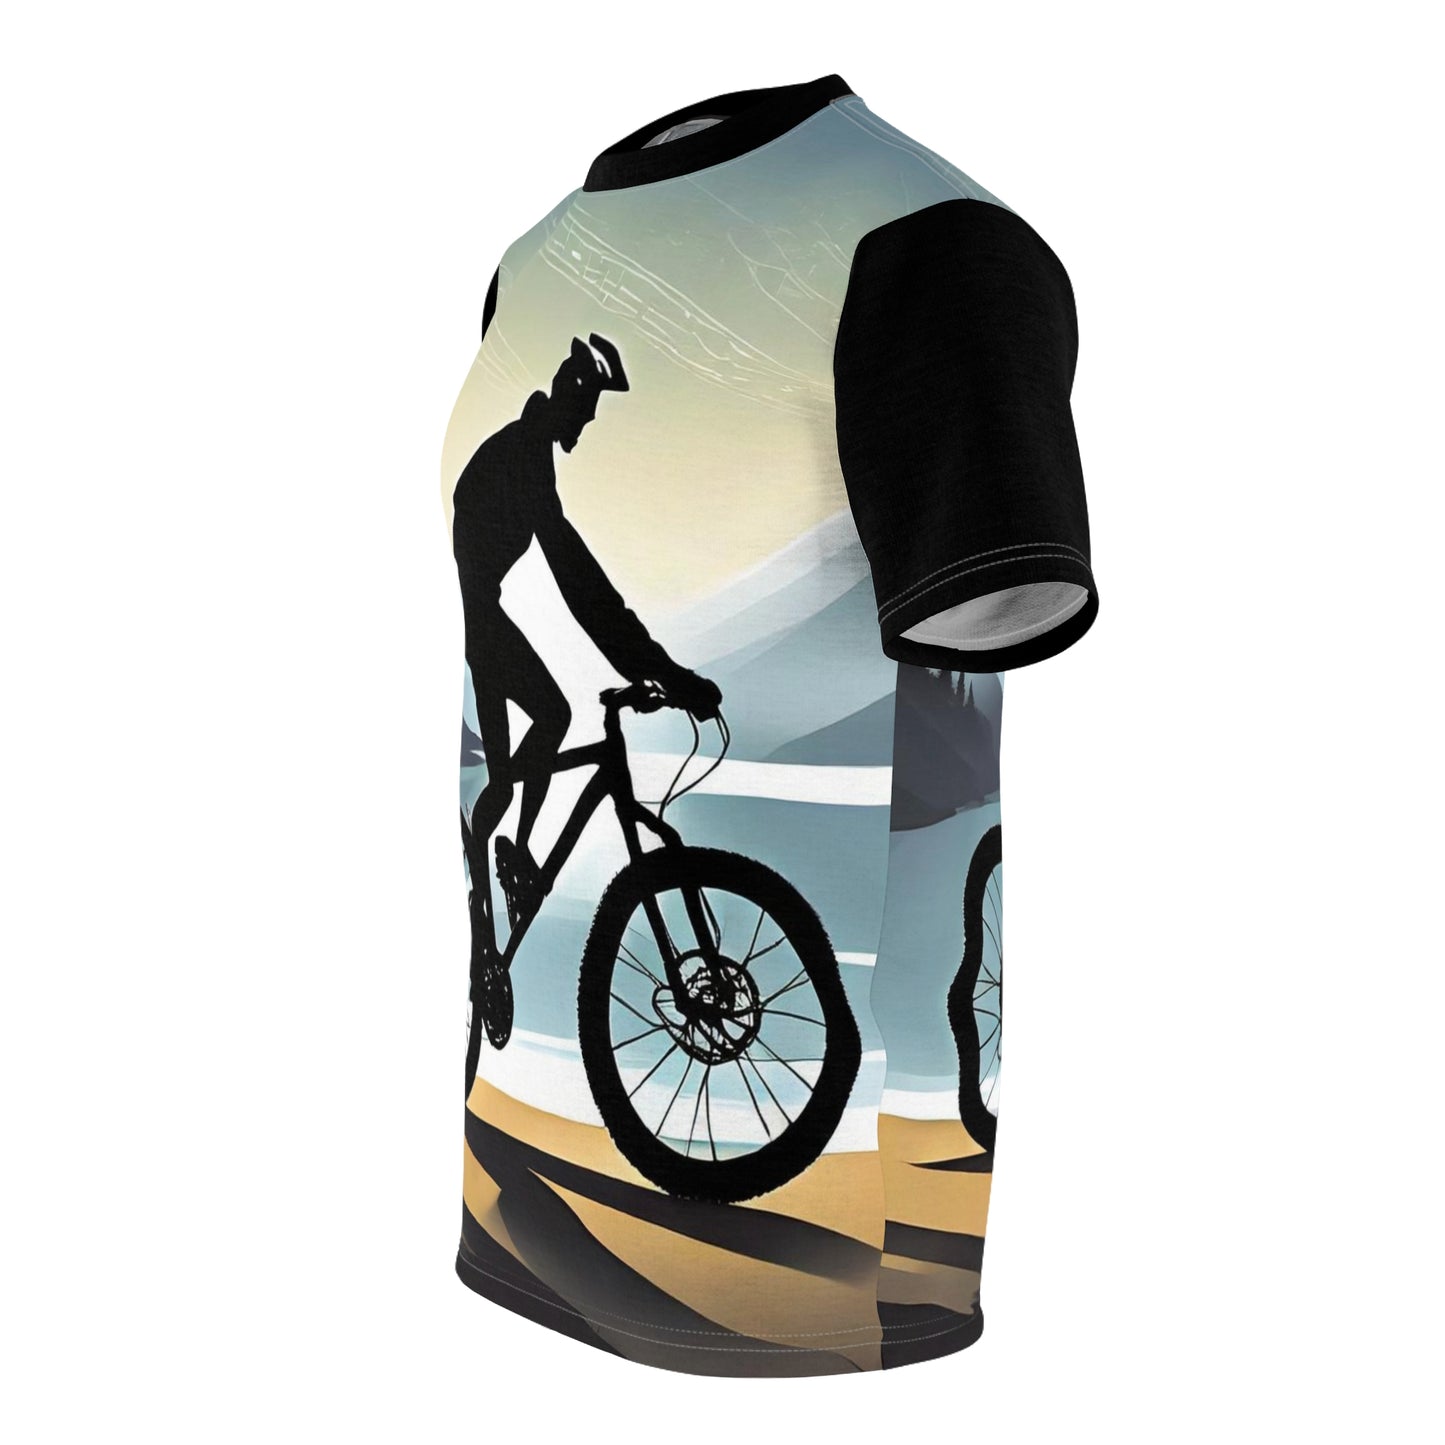 Men's Cut & Sew Tee (AOP)Eco Velo E Bicycle Rider t-shirt